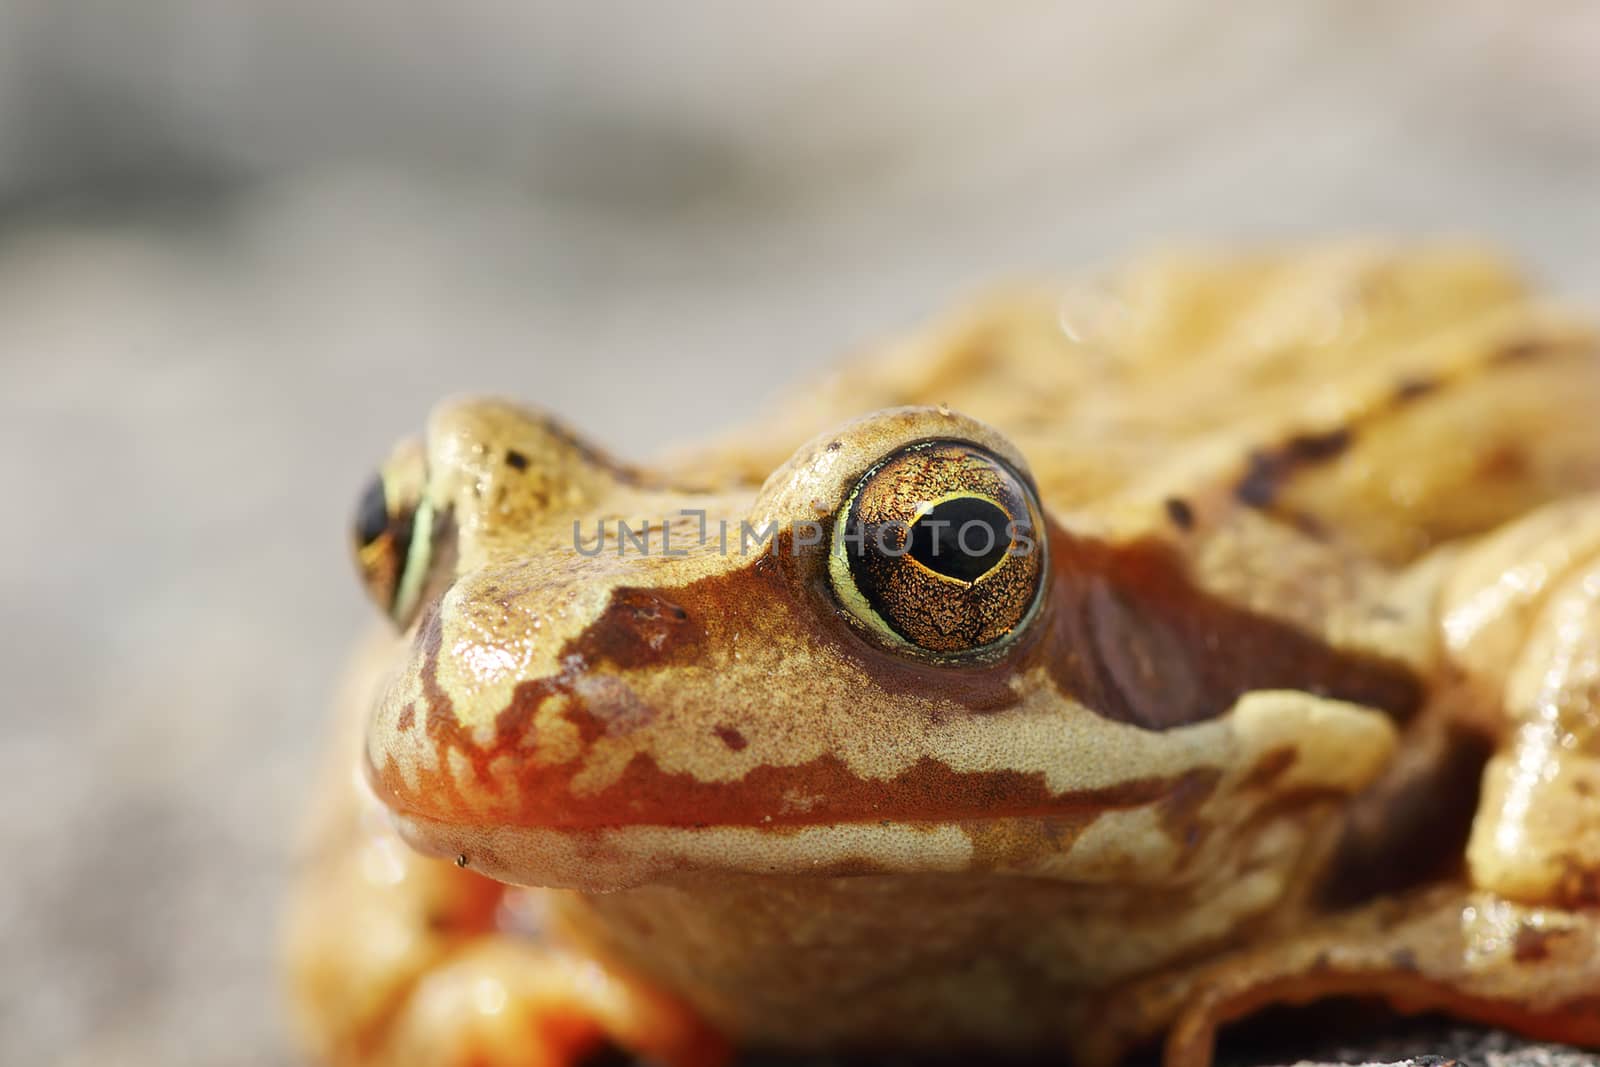 portrait of wild Rana temporaria, the european common brown frog